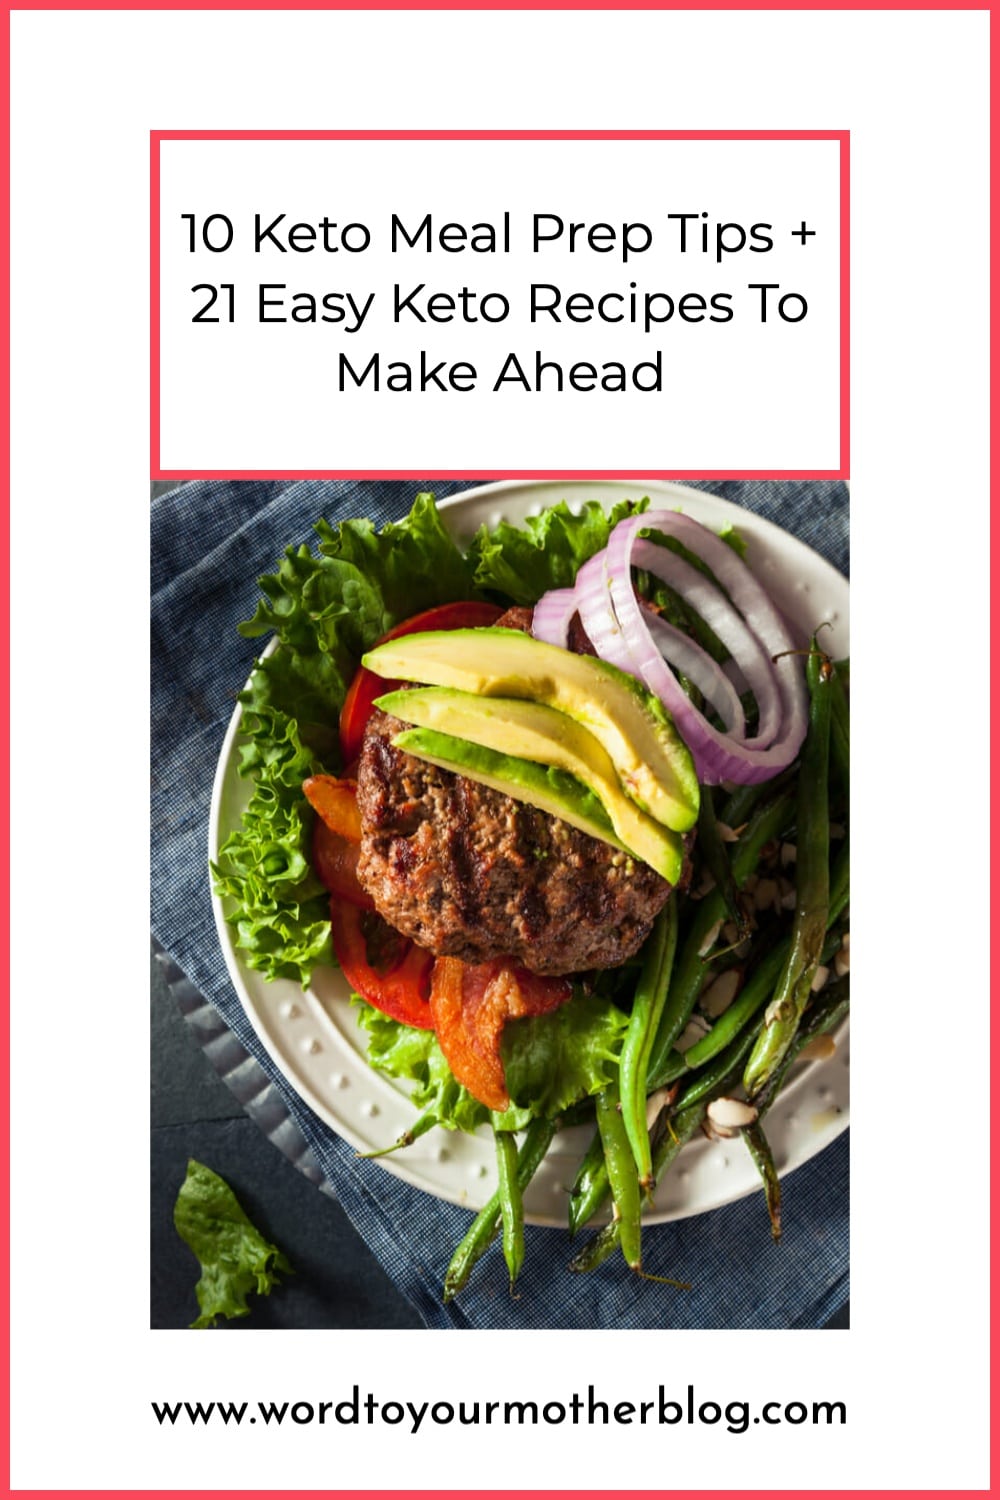 10 Keto Meal Prep Tips + 50 Easy Keto Recipes To Make Ahead